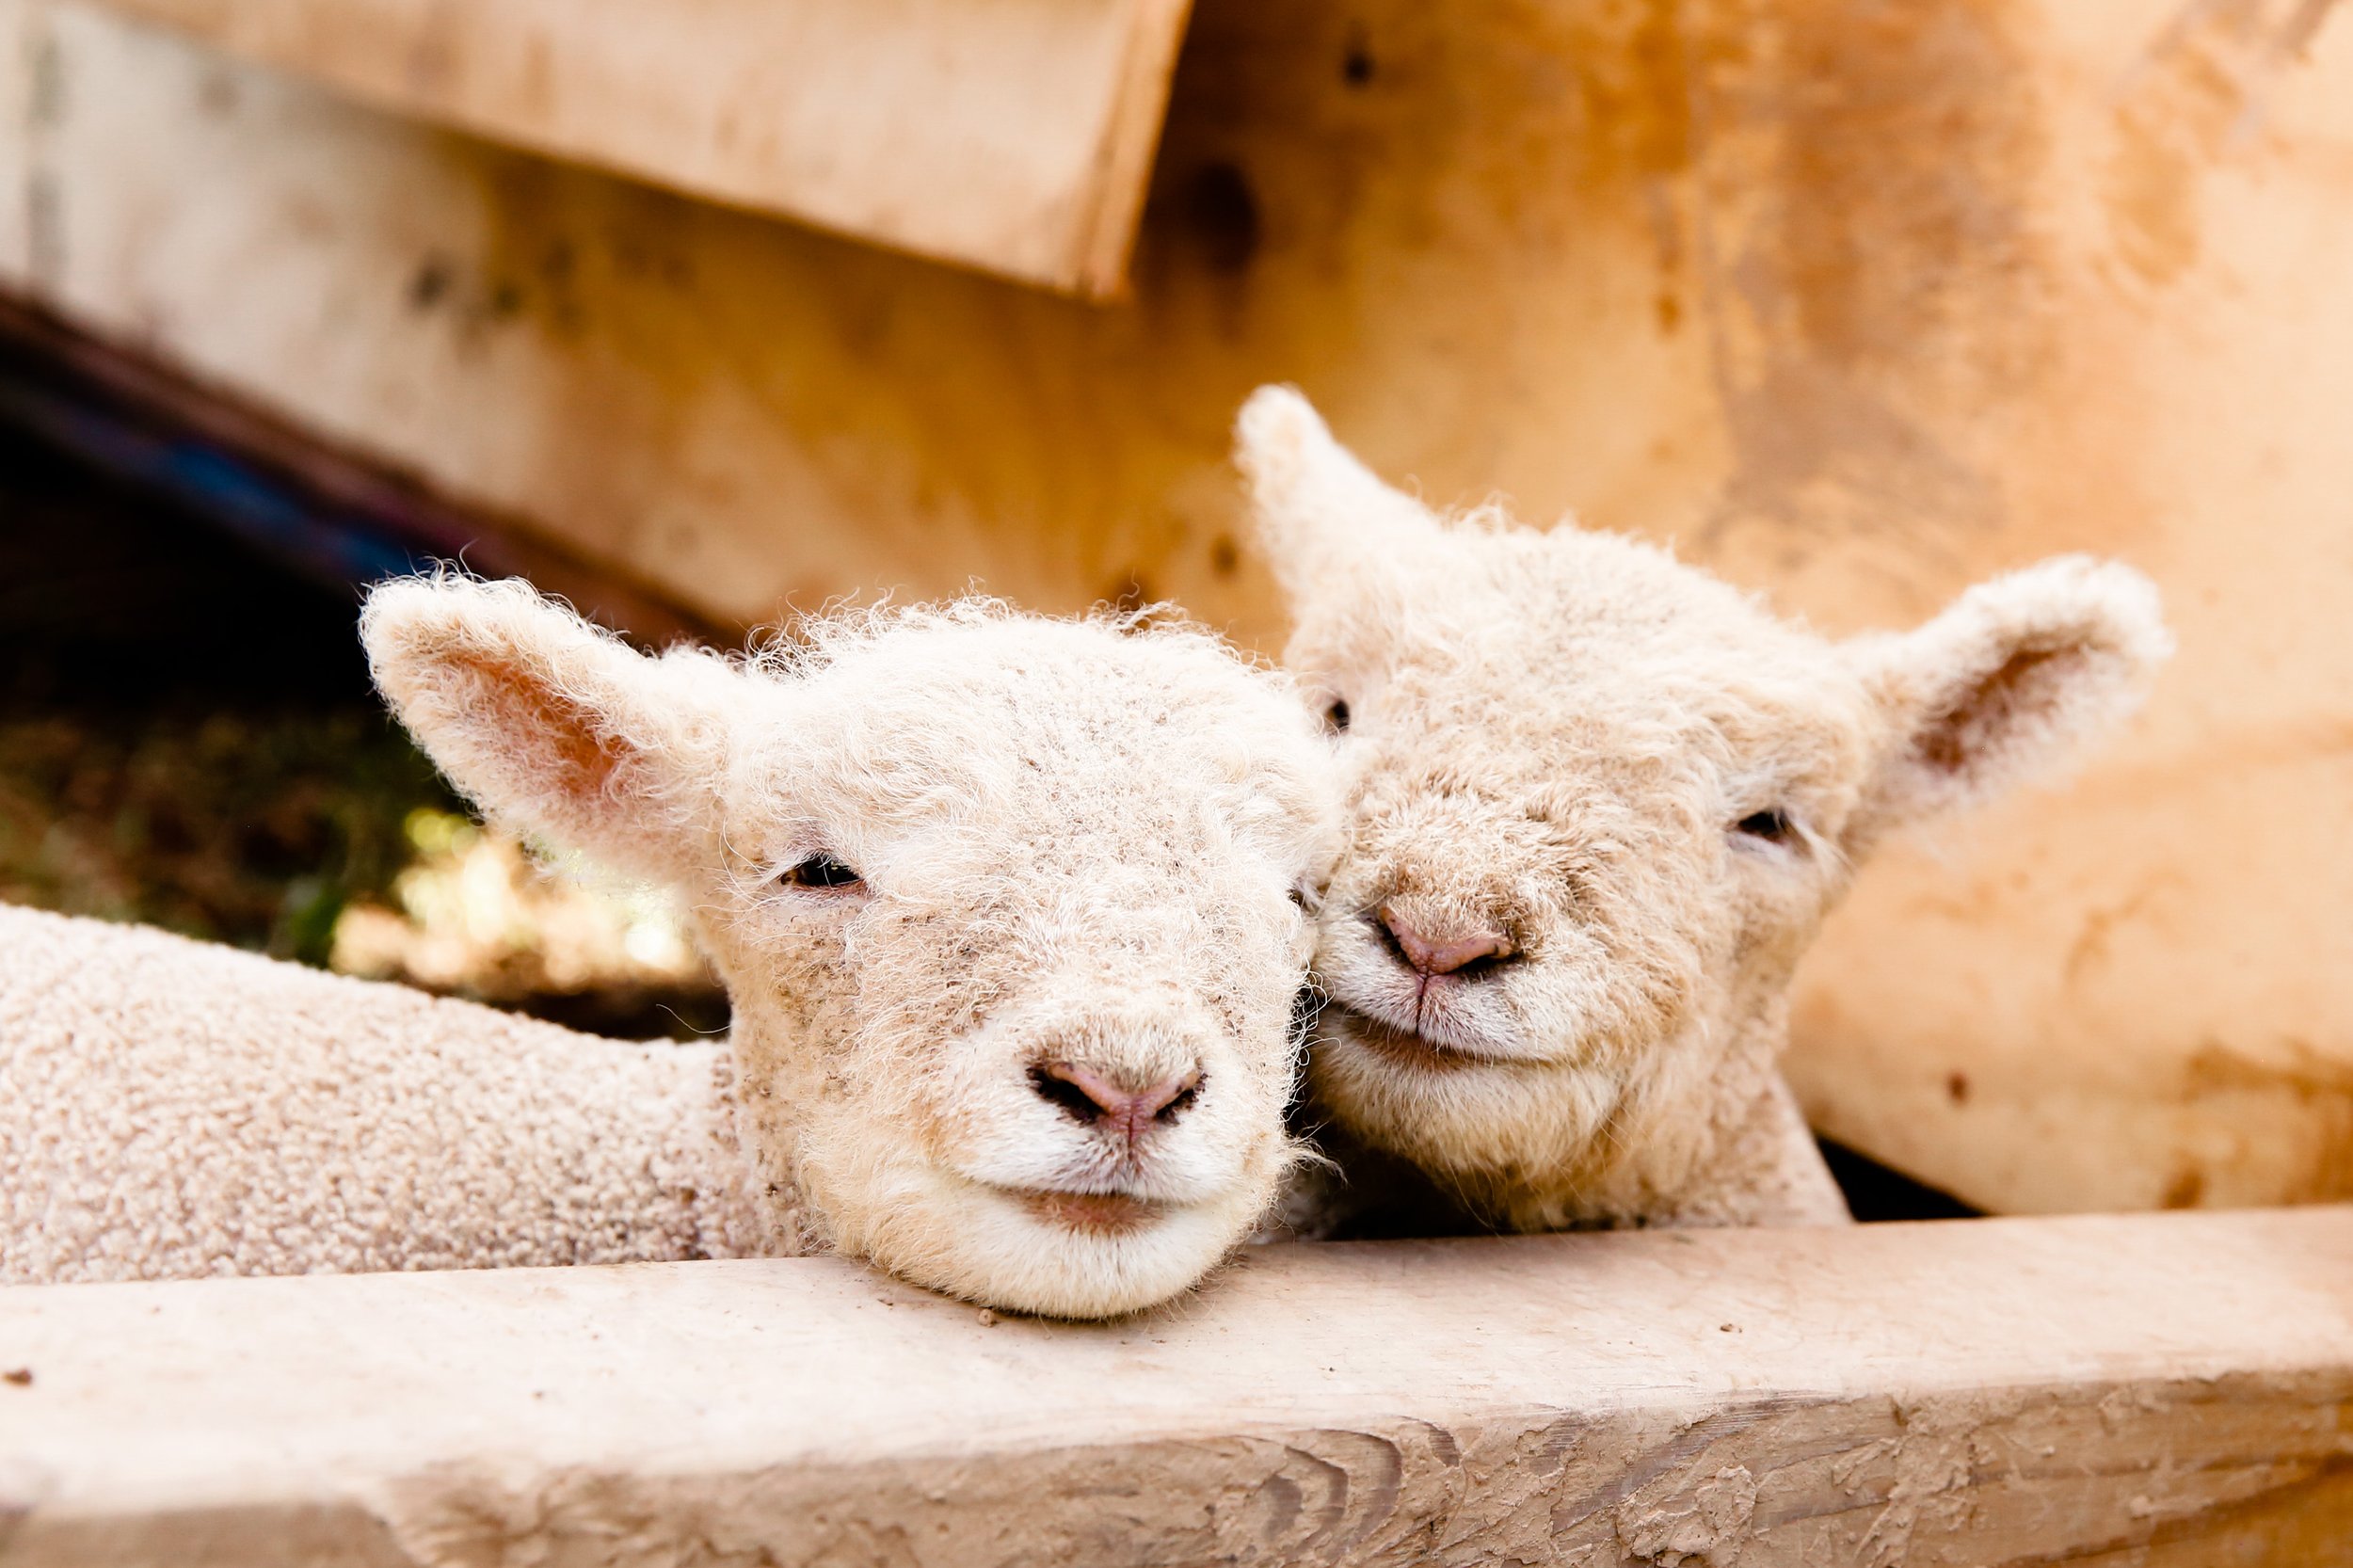 Babydoll lamb sisters snuggling together